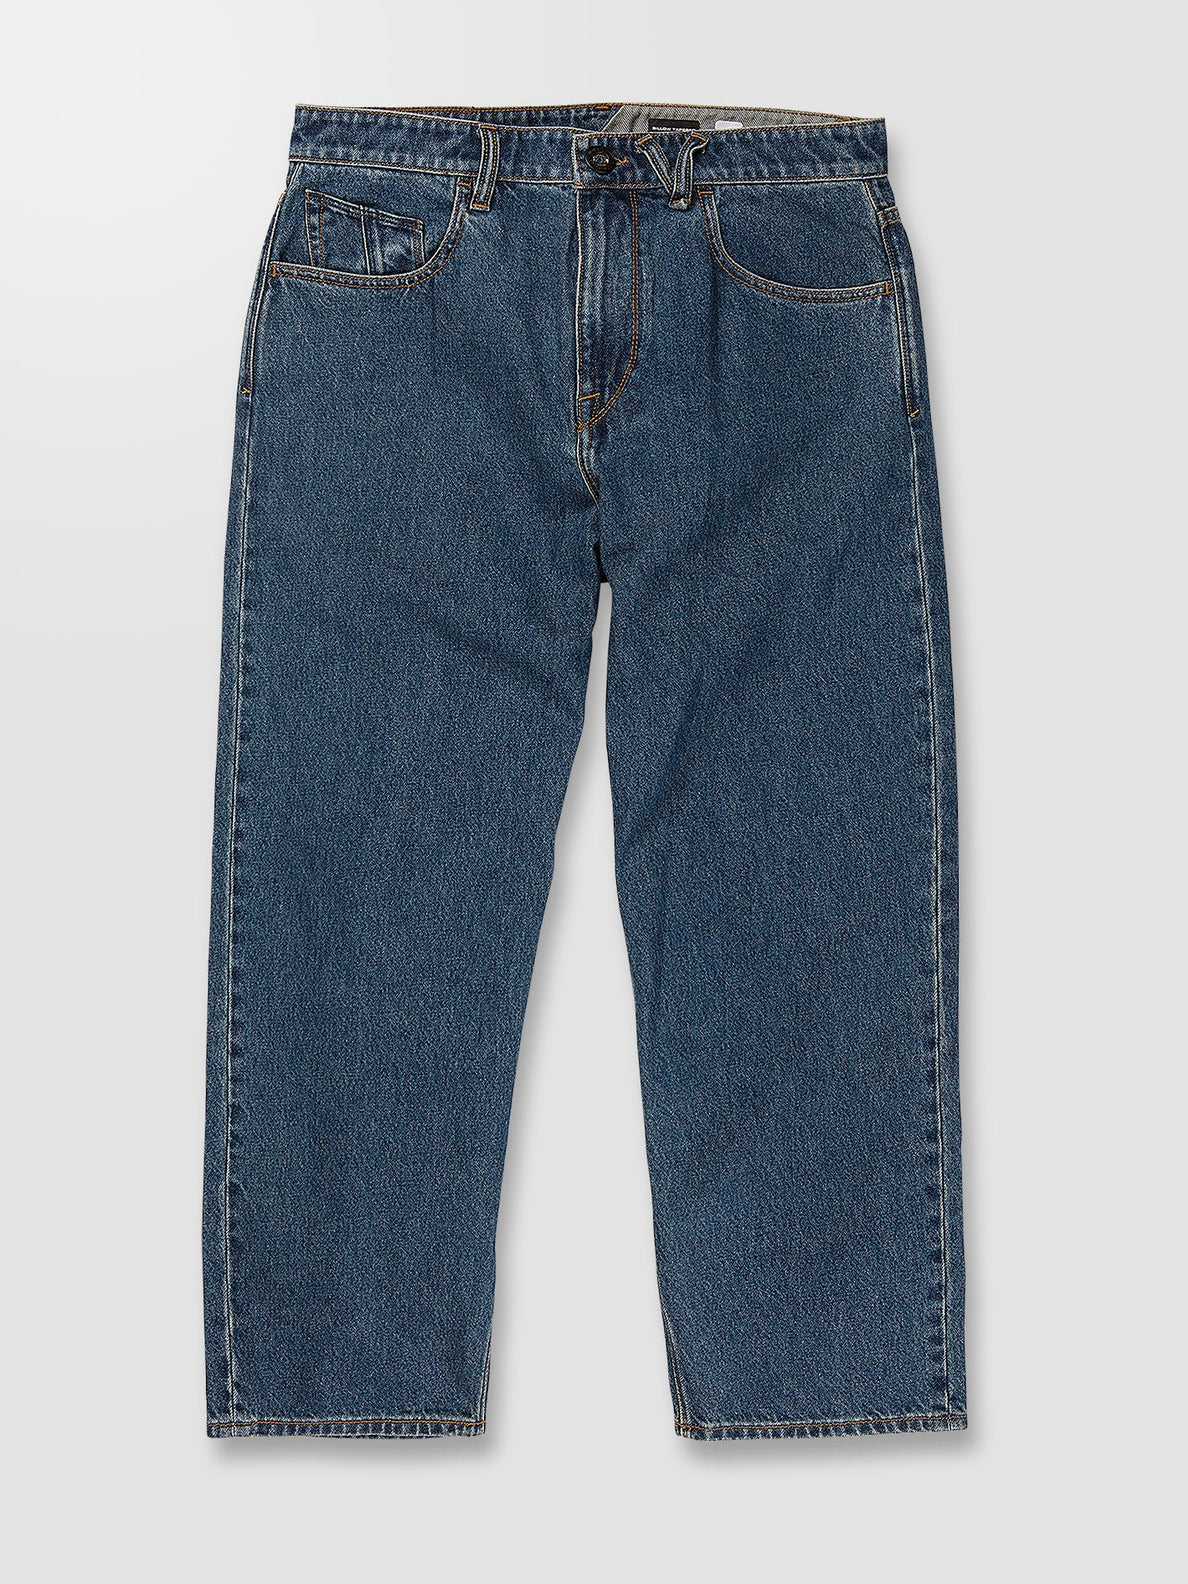 Billow Tapered Jeans - INDIGO RIDGE WASH (A1932200_IRW) [9]